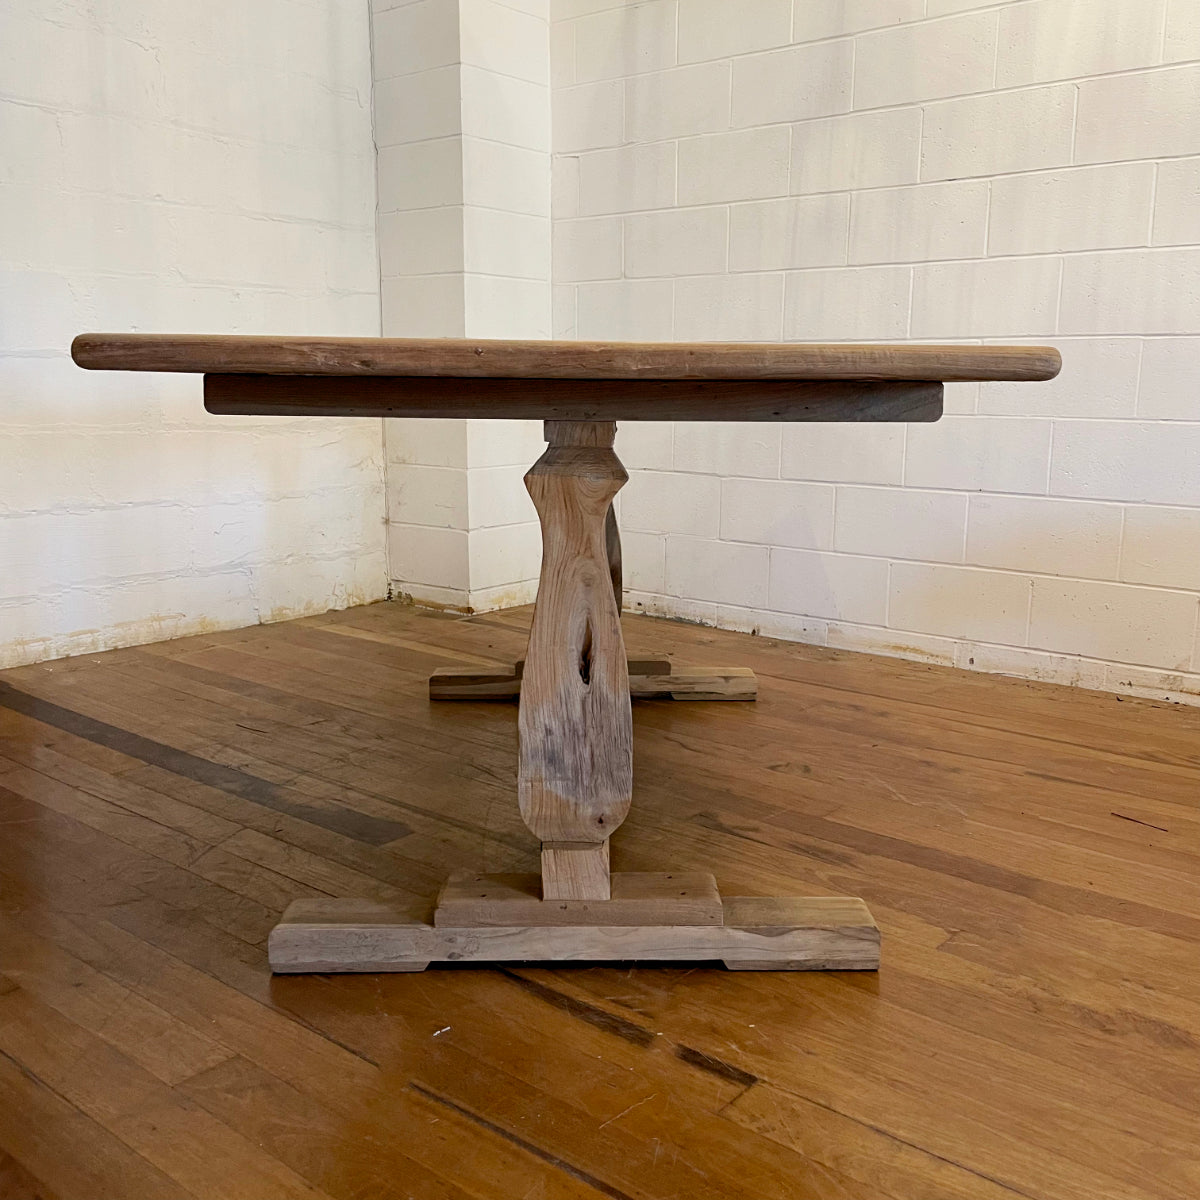 Teak Timber Titan Leg Dining Table 2m x 1m